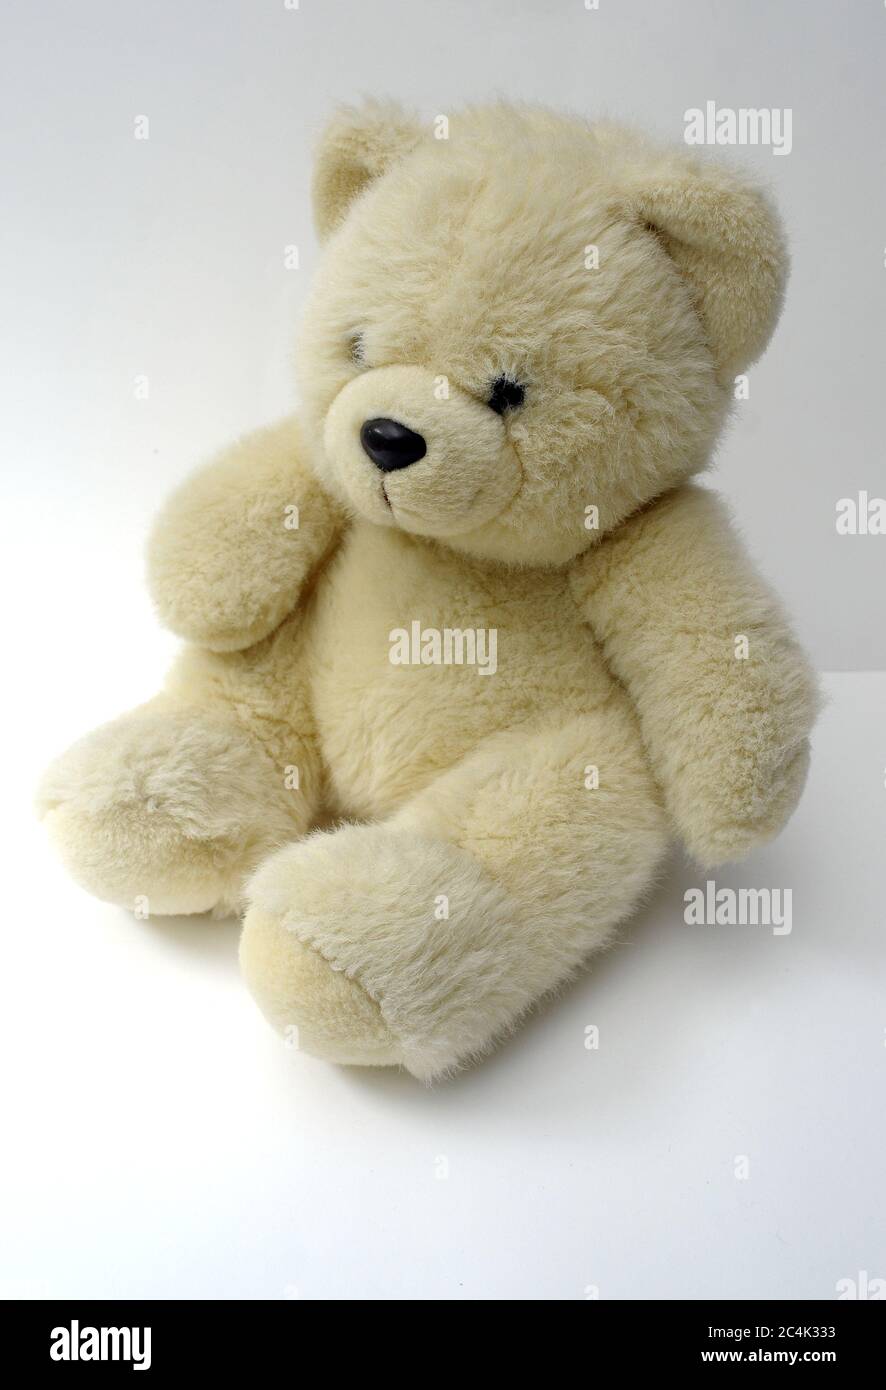 teddy bear toy Stock Photo